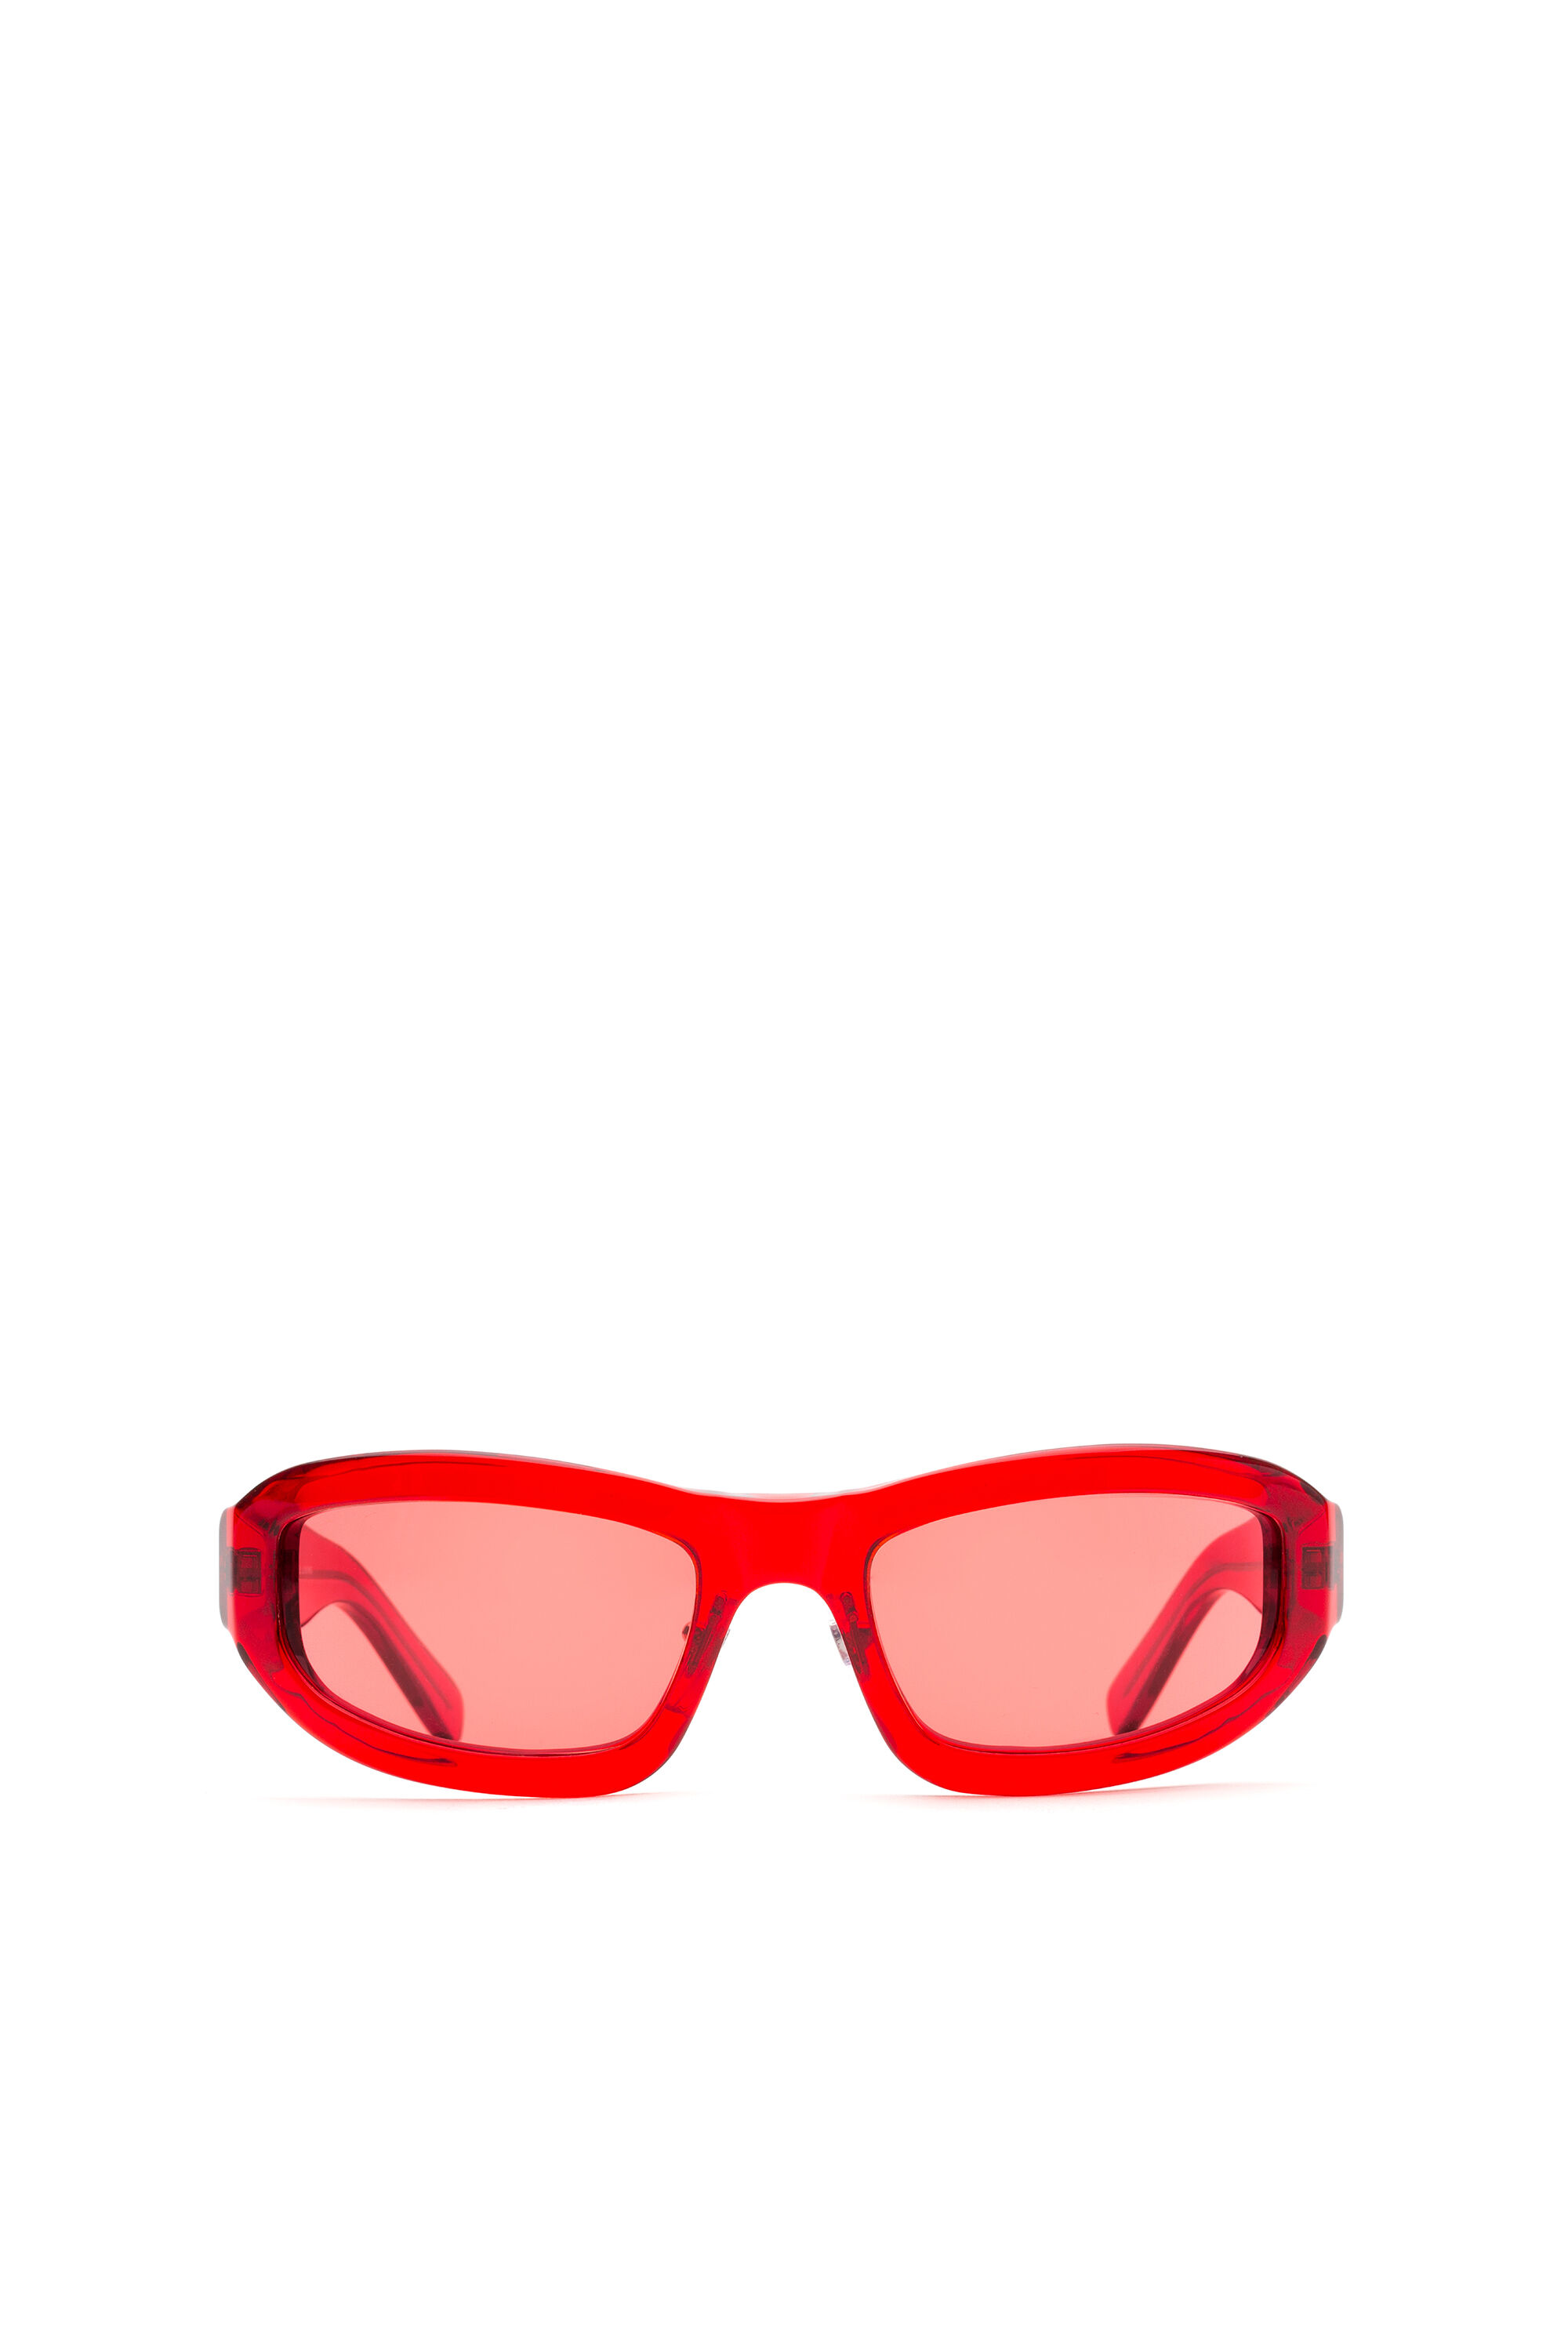 DM0363: Wraparound sports-aesthetics sunglasses | Diesel